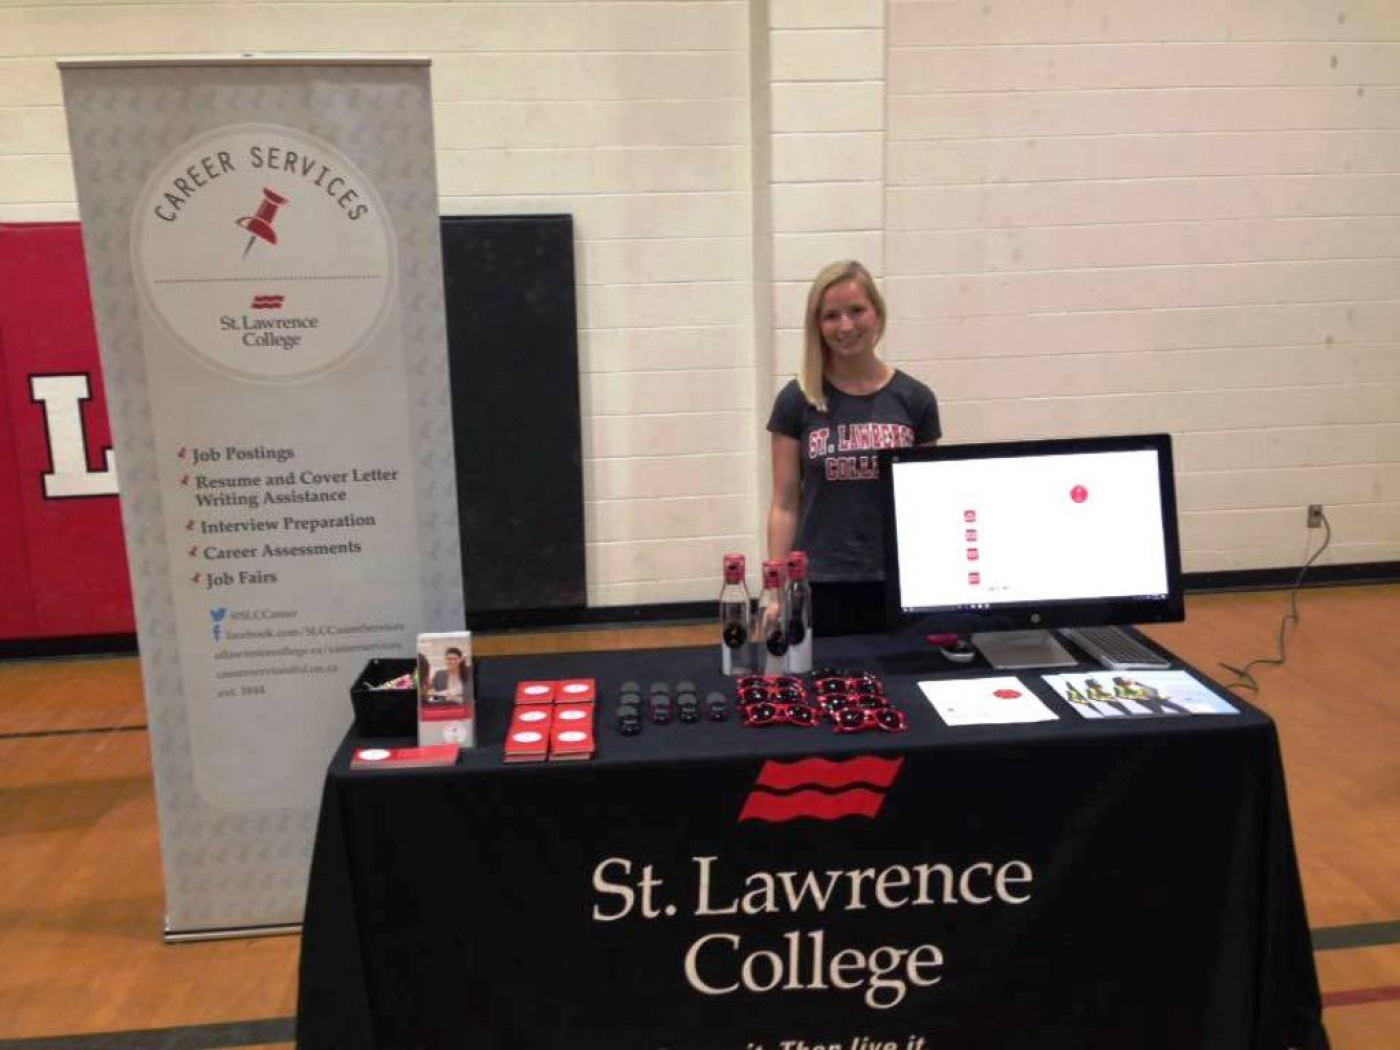 St. Lawrence College - Brockville Campus